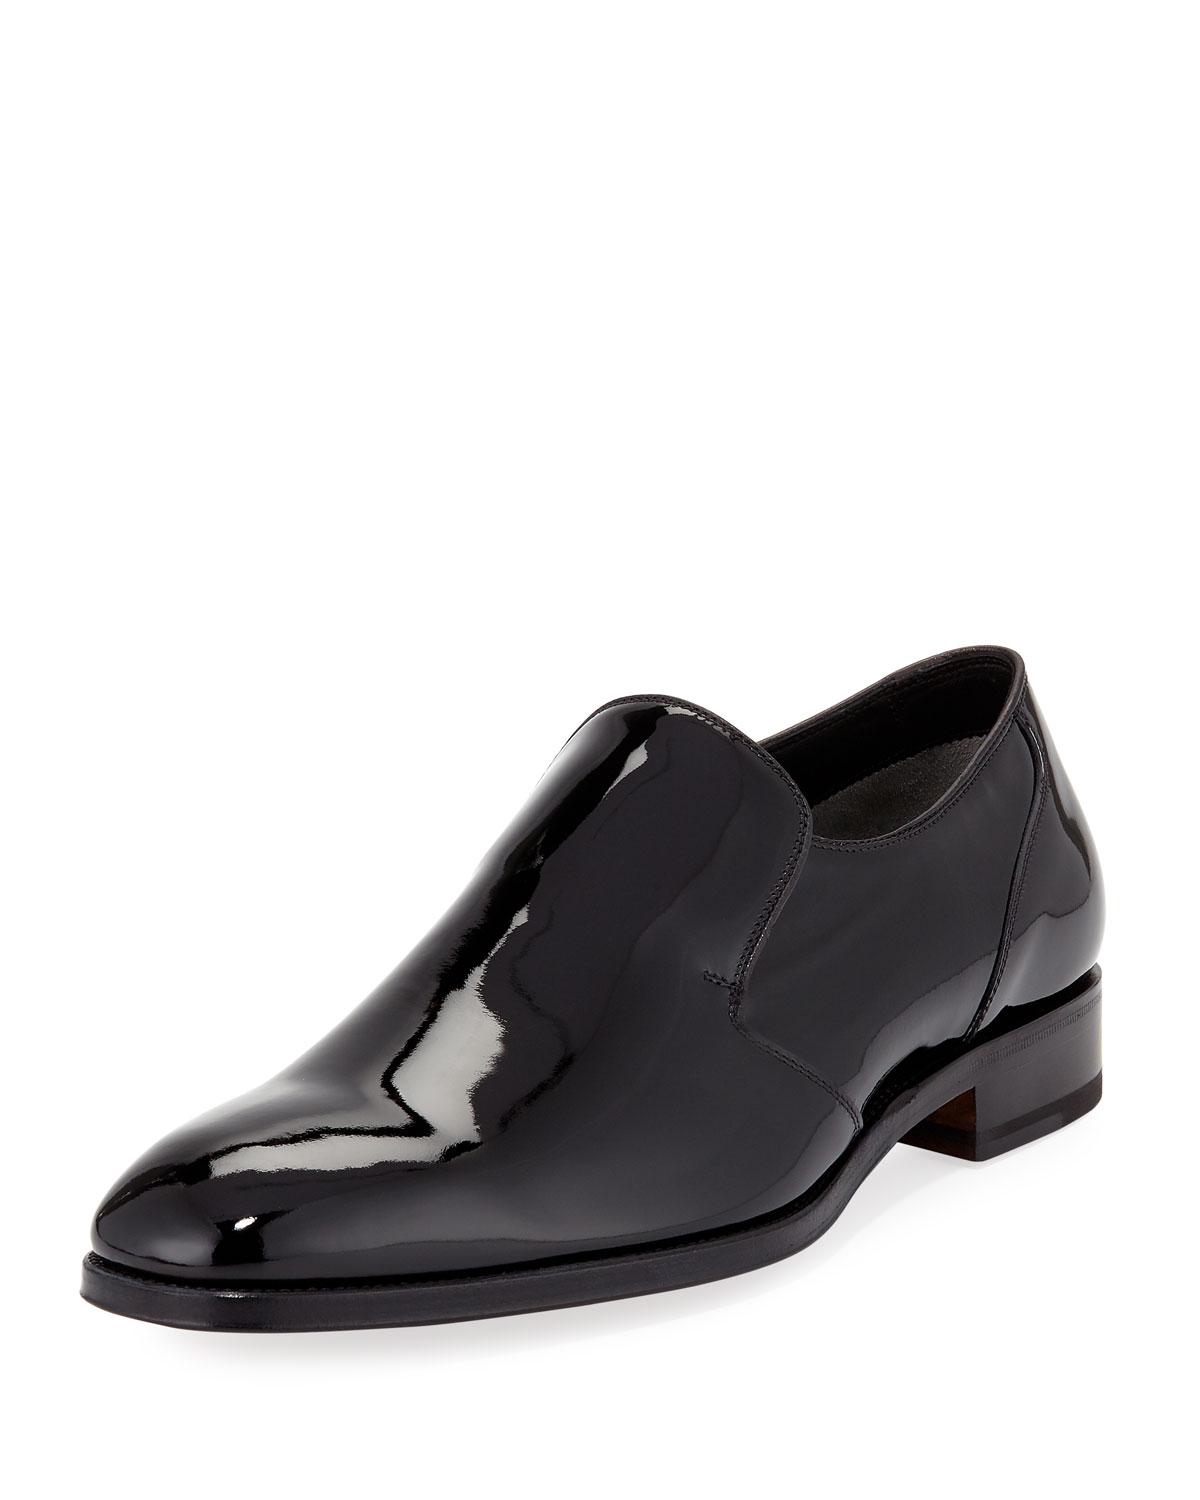 Lyst - Tom Ford Slip-on Patent Leather Formal Loafer in Black for Men